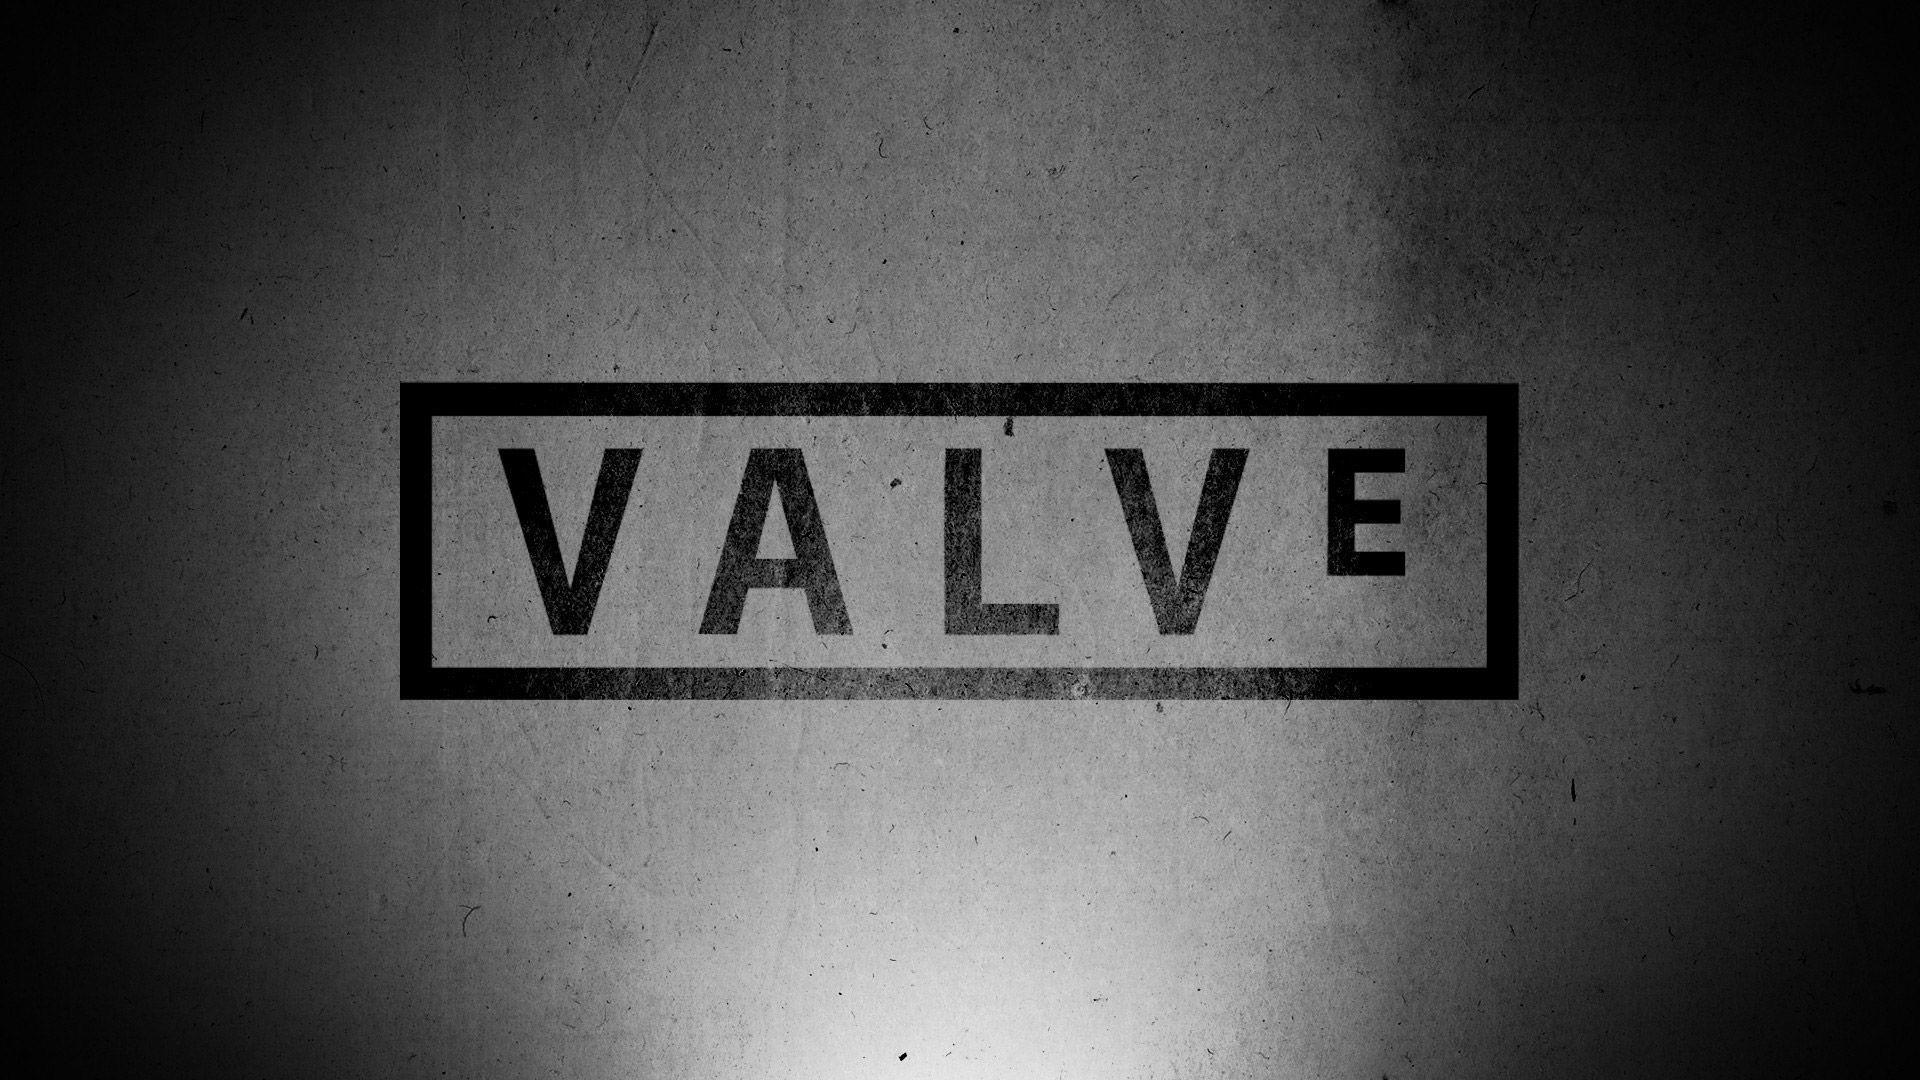 HD Valve Wallpaper